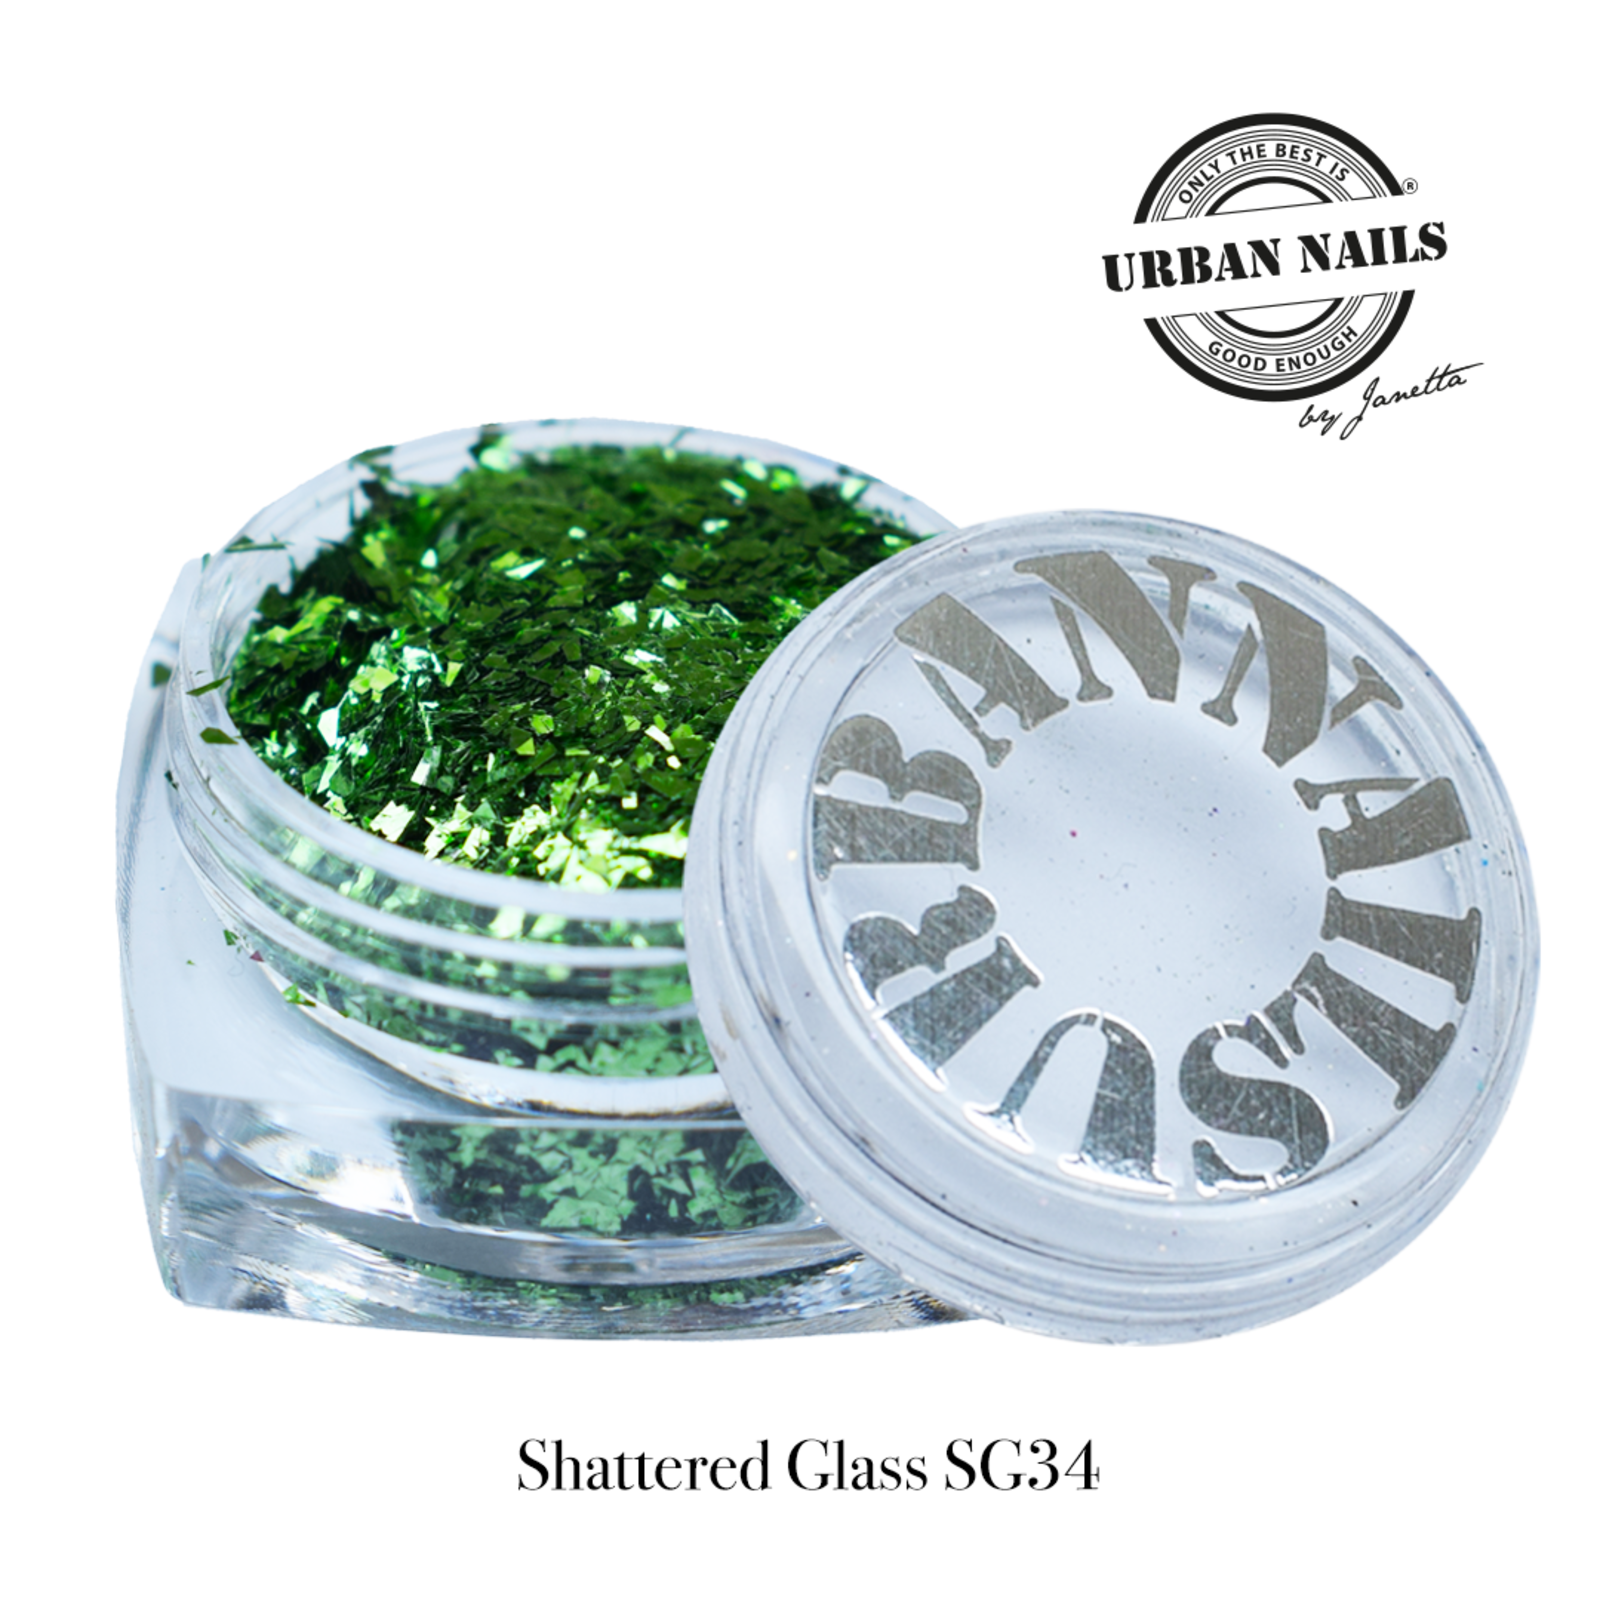 Urban nails Shattered Glass SG34 hologram groen